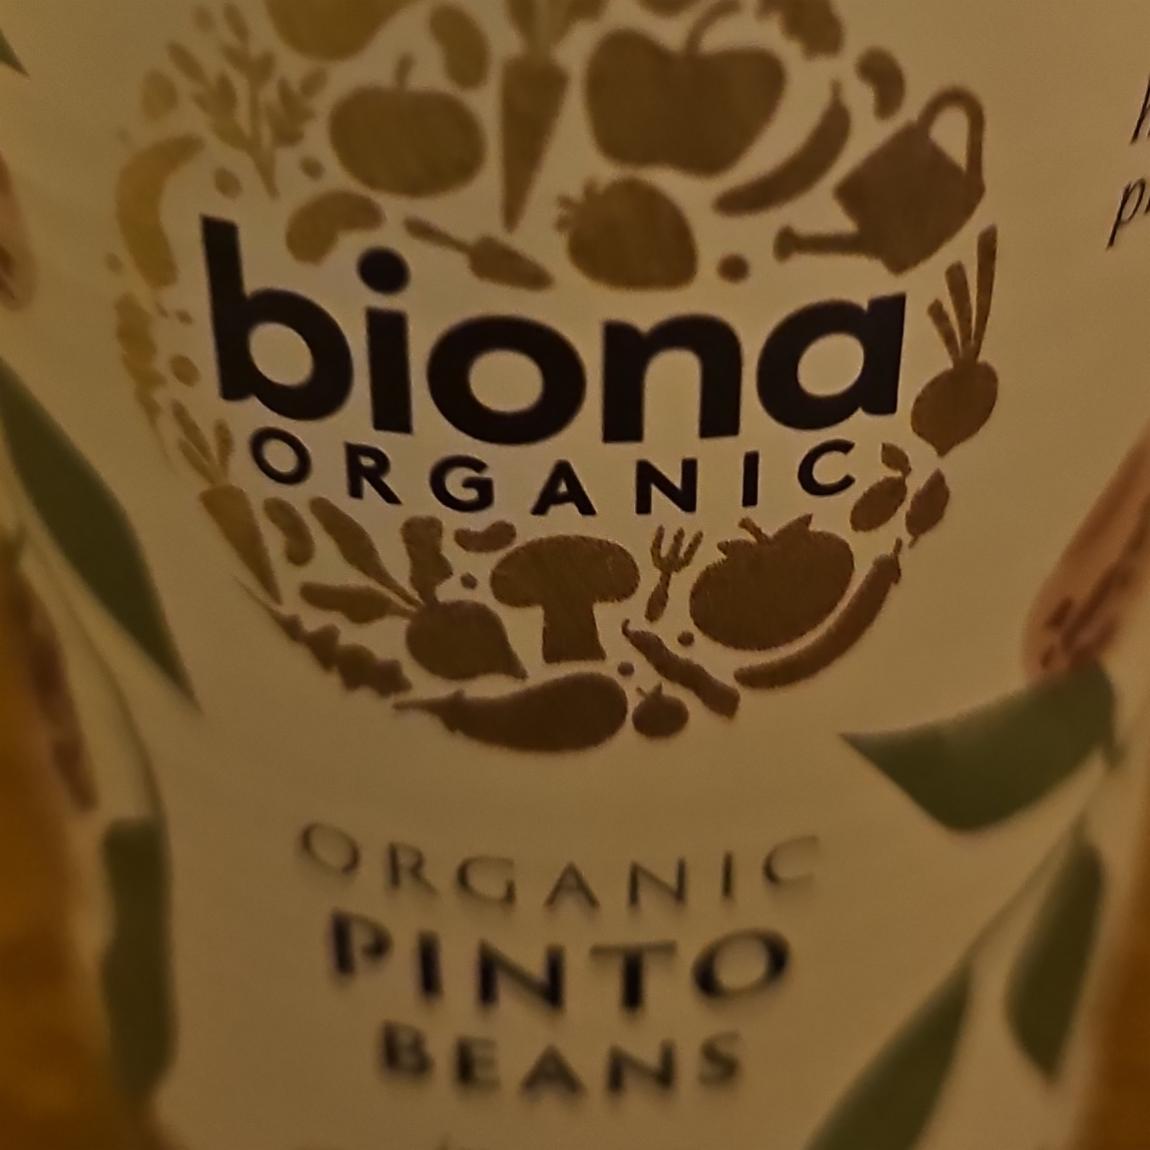 Fotografie - Organic Pinto Beans Biona